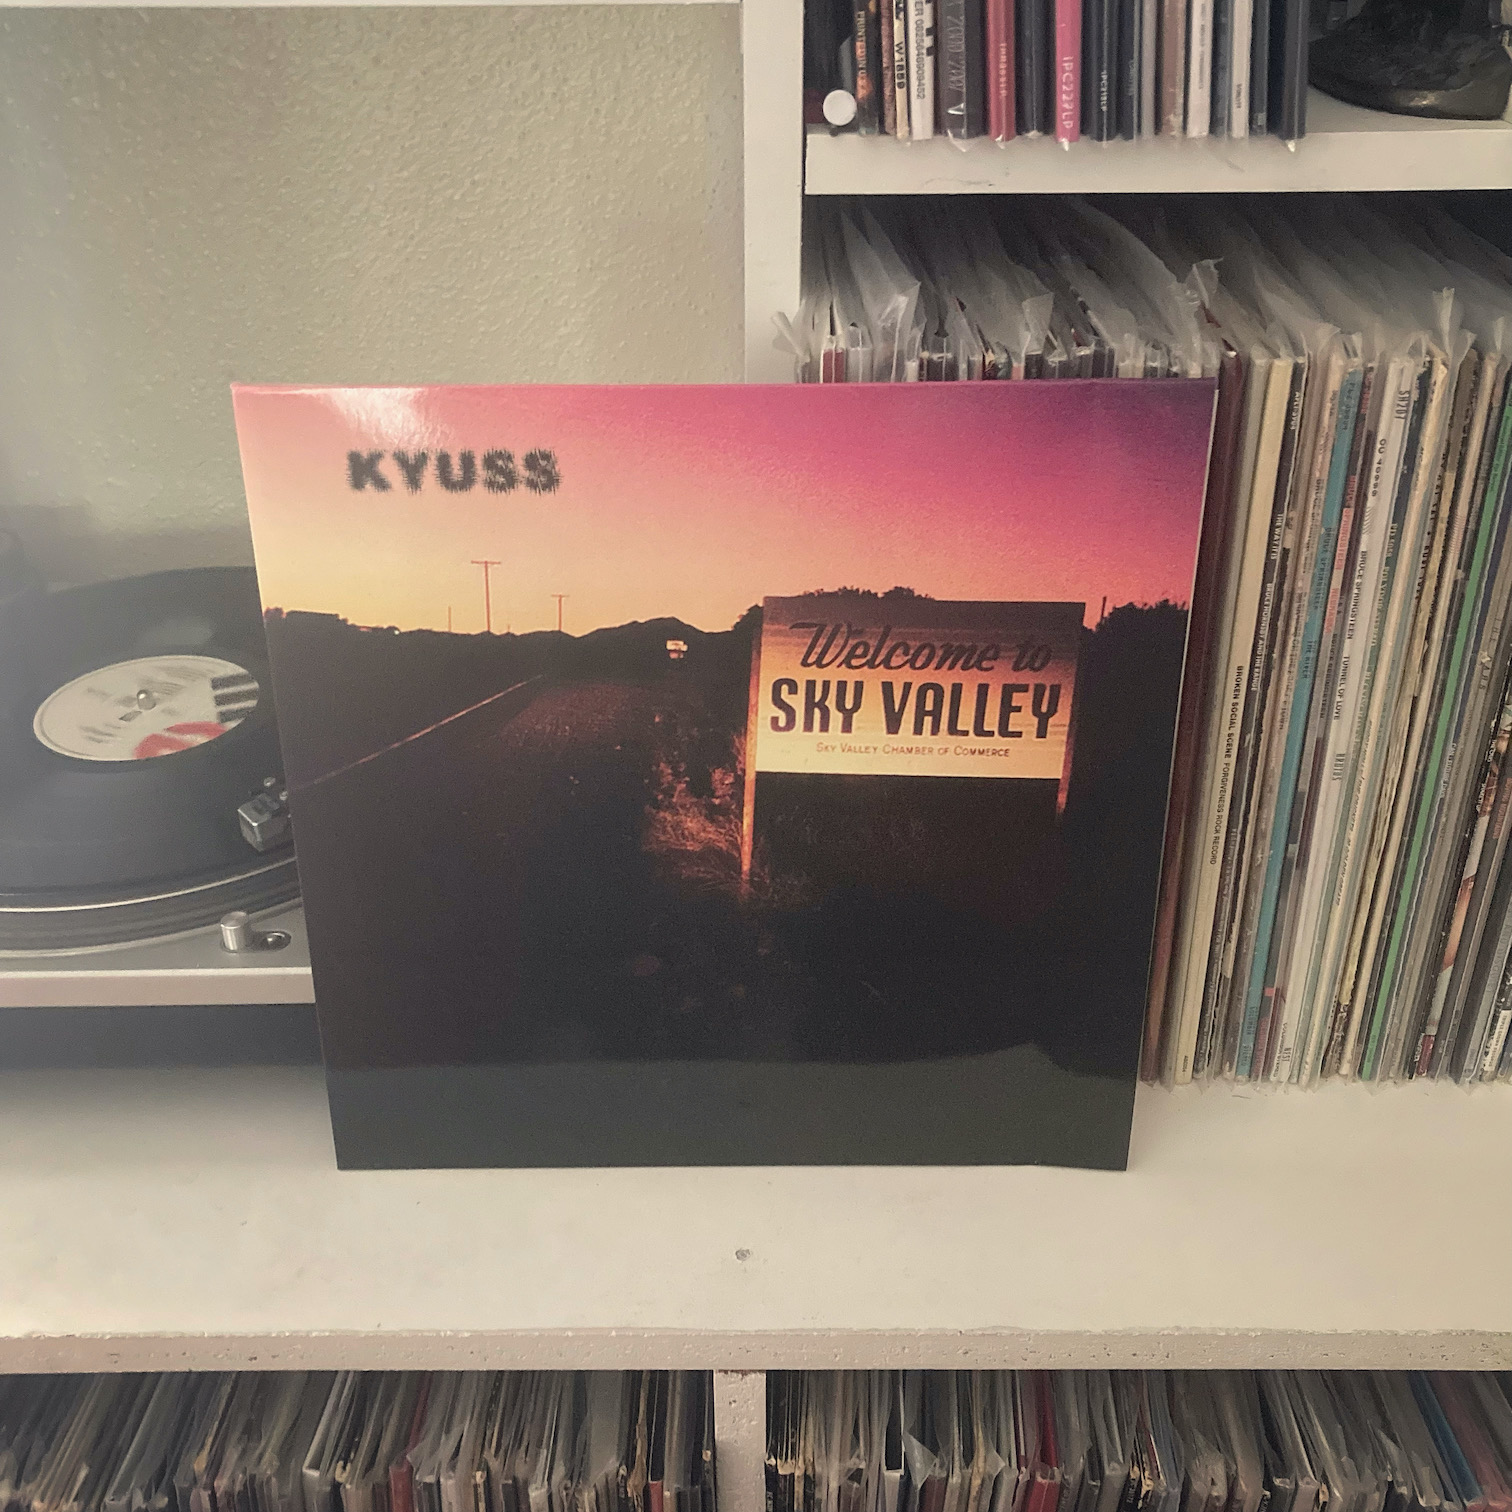 Ingen måde lidenskabelig snorkel Record #773: Kyuss - Welcome to Sky Valley (1994) - A Year of Vinyl